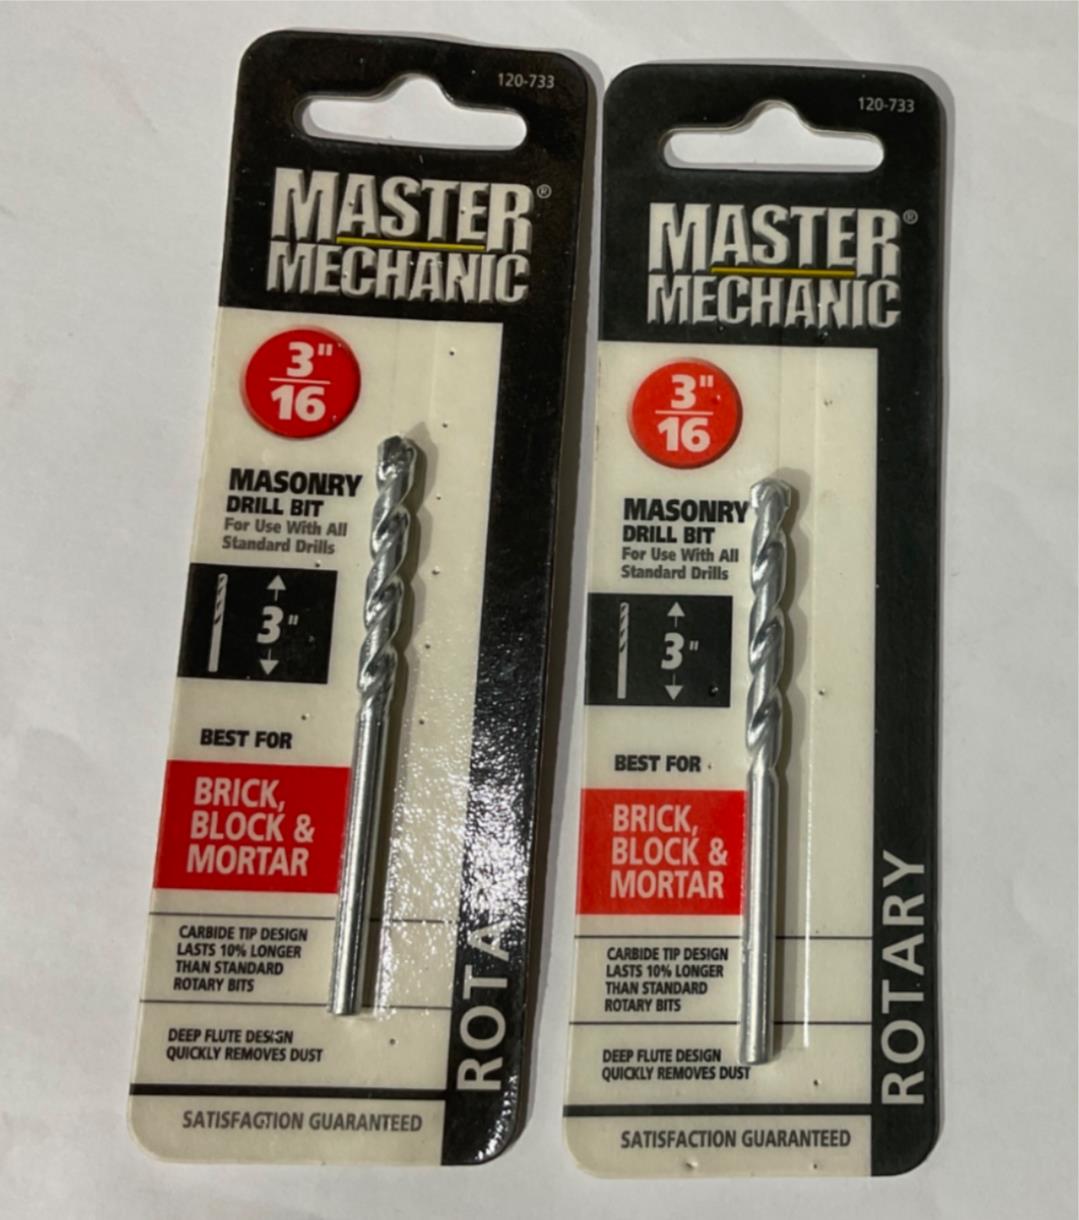 Master Mechanic 120 733 3/16" Masonry 3" Carbide Tip Rotary Drill Bit 2pks